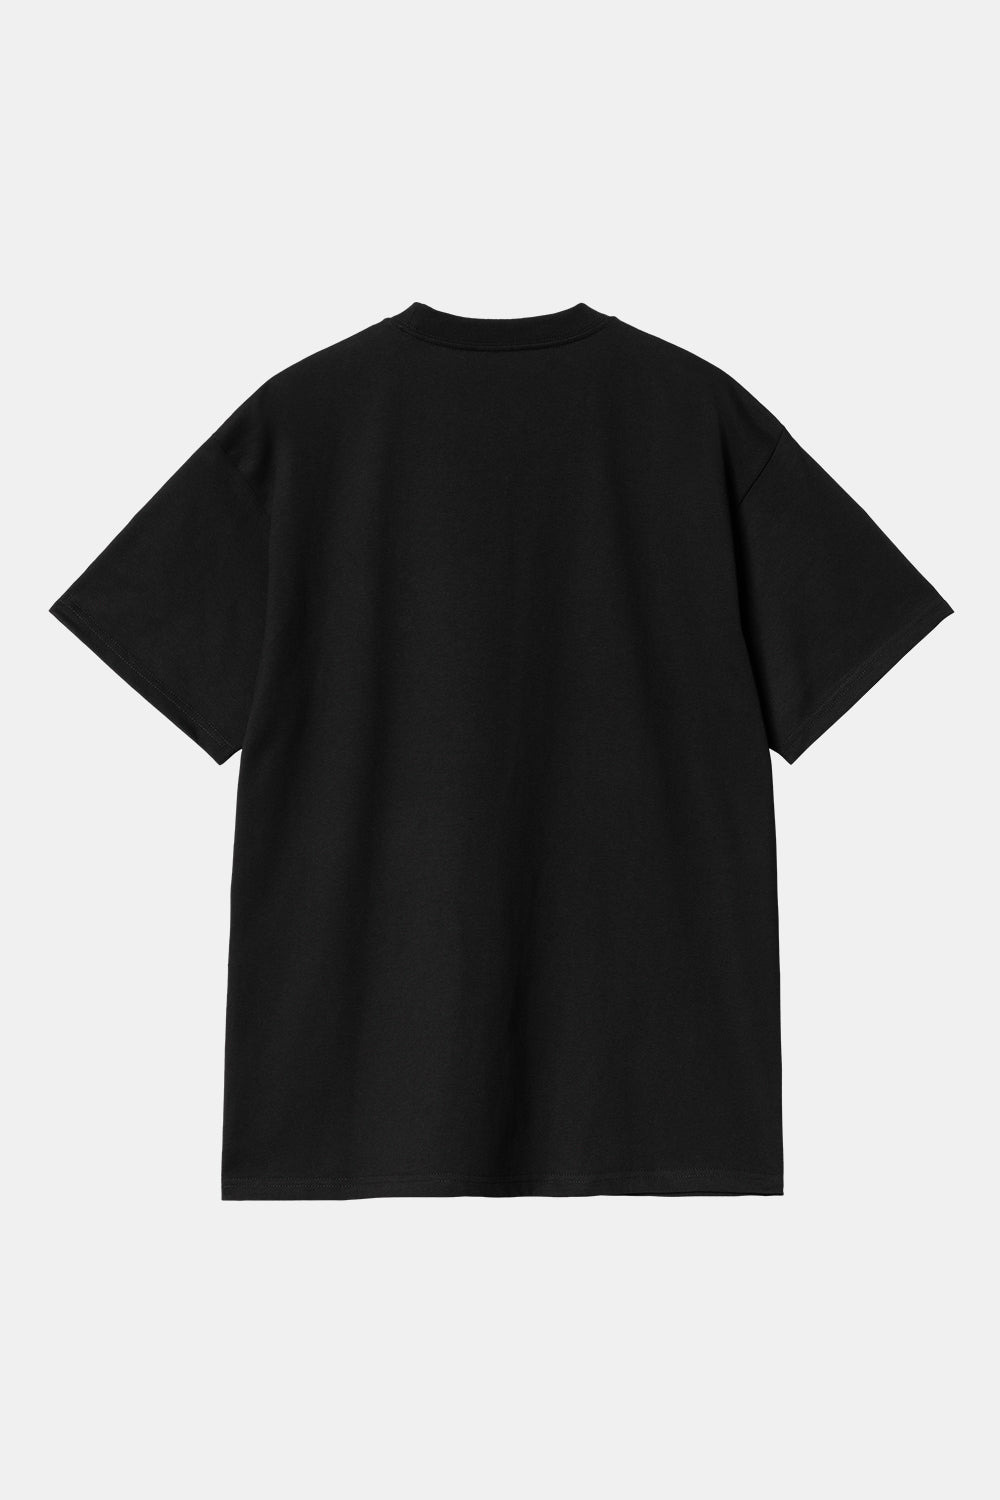 Carhartt WIP Short Sleeve Icons T-Shirt (Black/White)